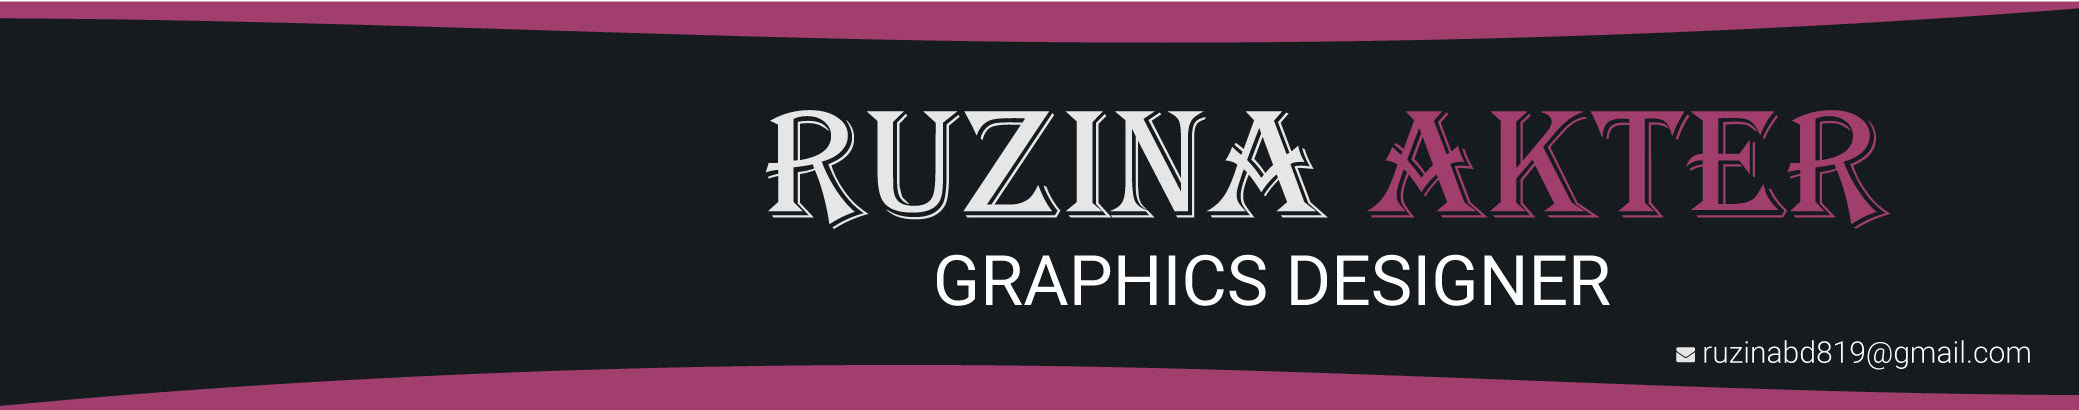 Ruzina Akter's profile banner